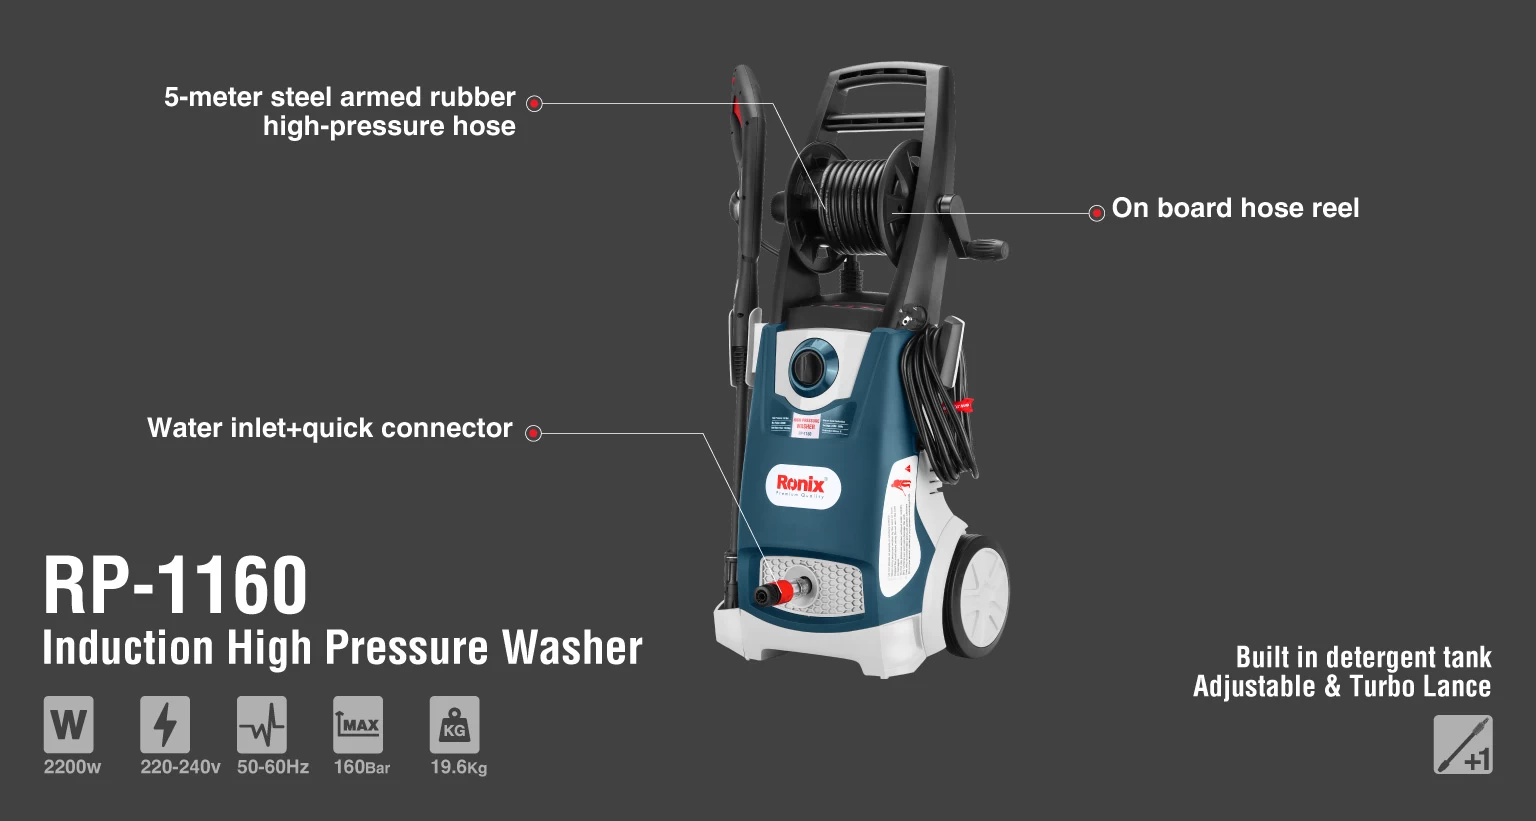 Induction High Pressure Washer 160bar-2200W_details